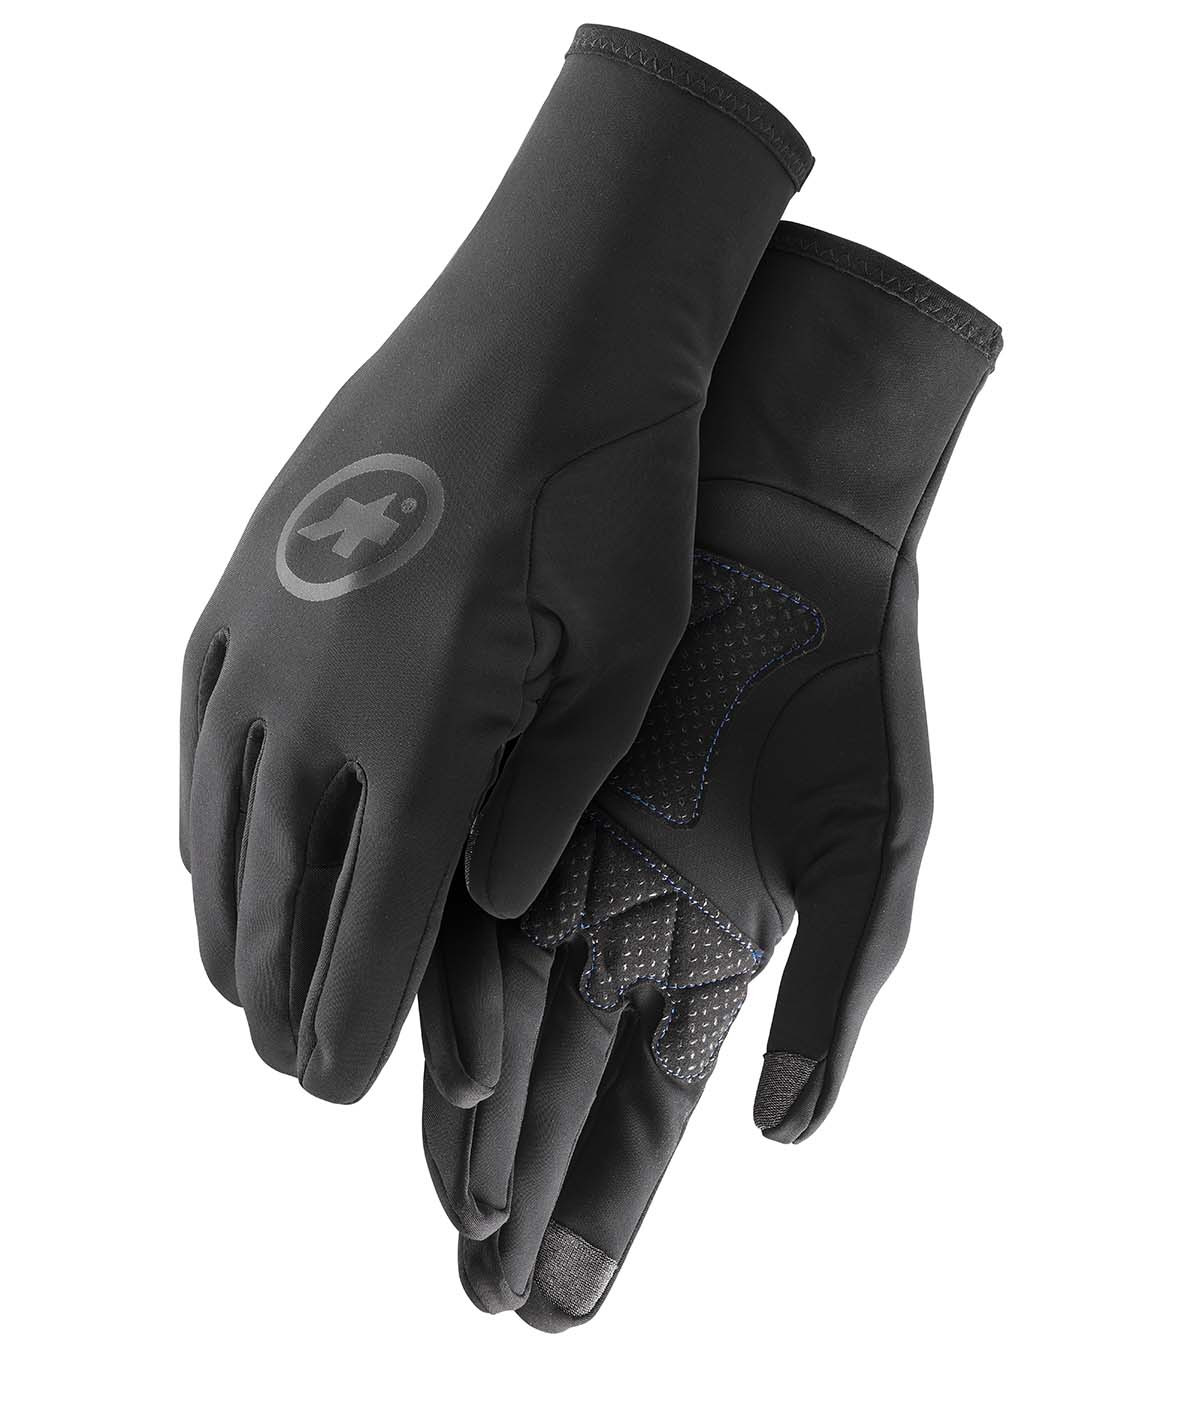 Assos Winter Gloves Evo  - Blackseries